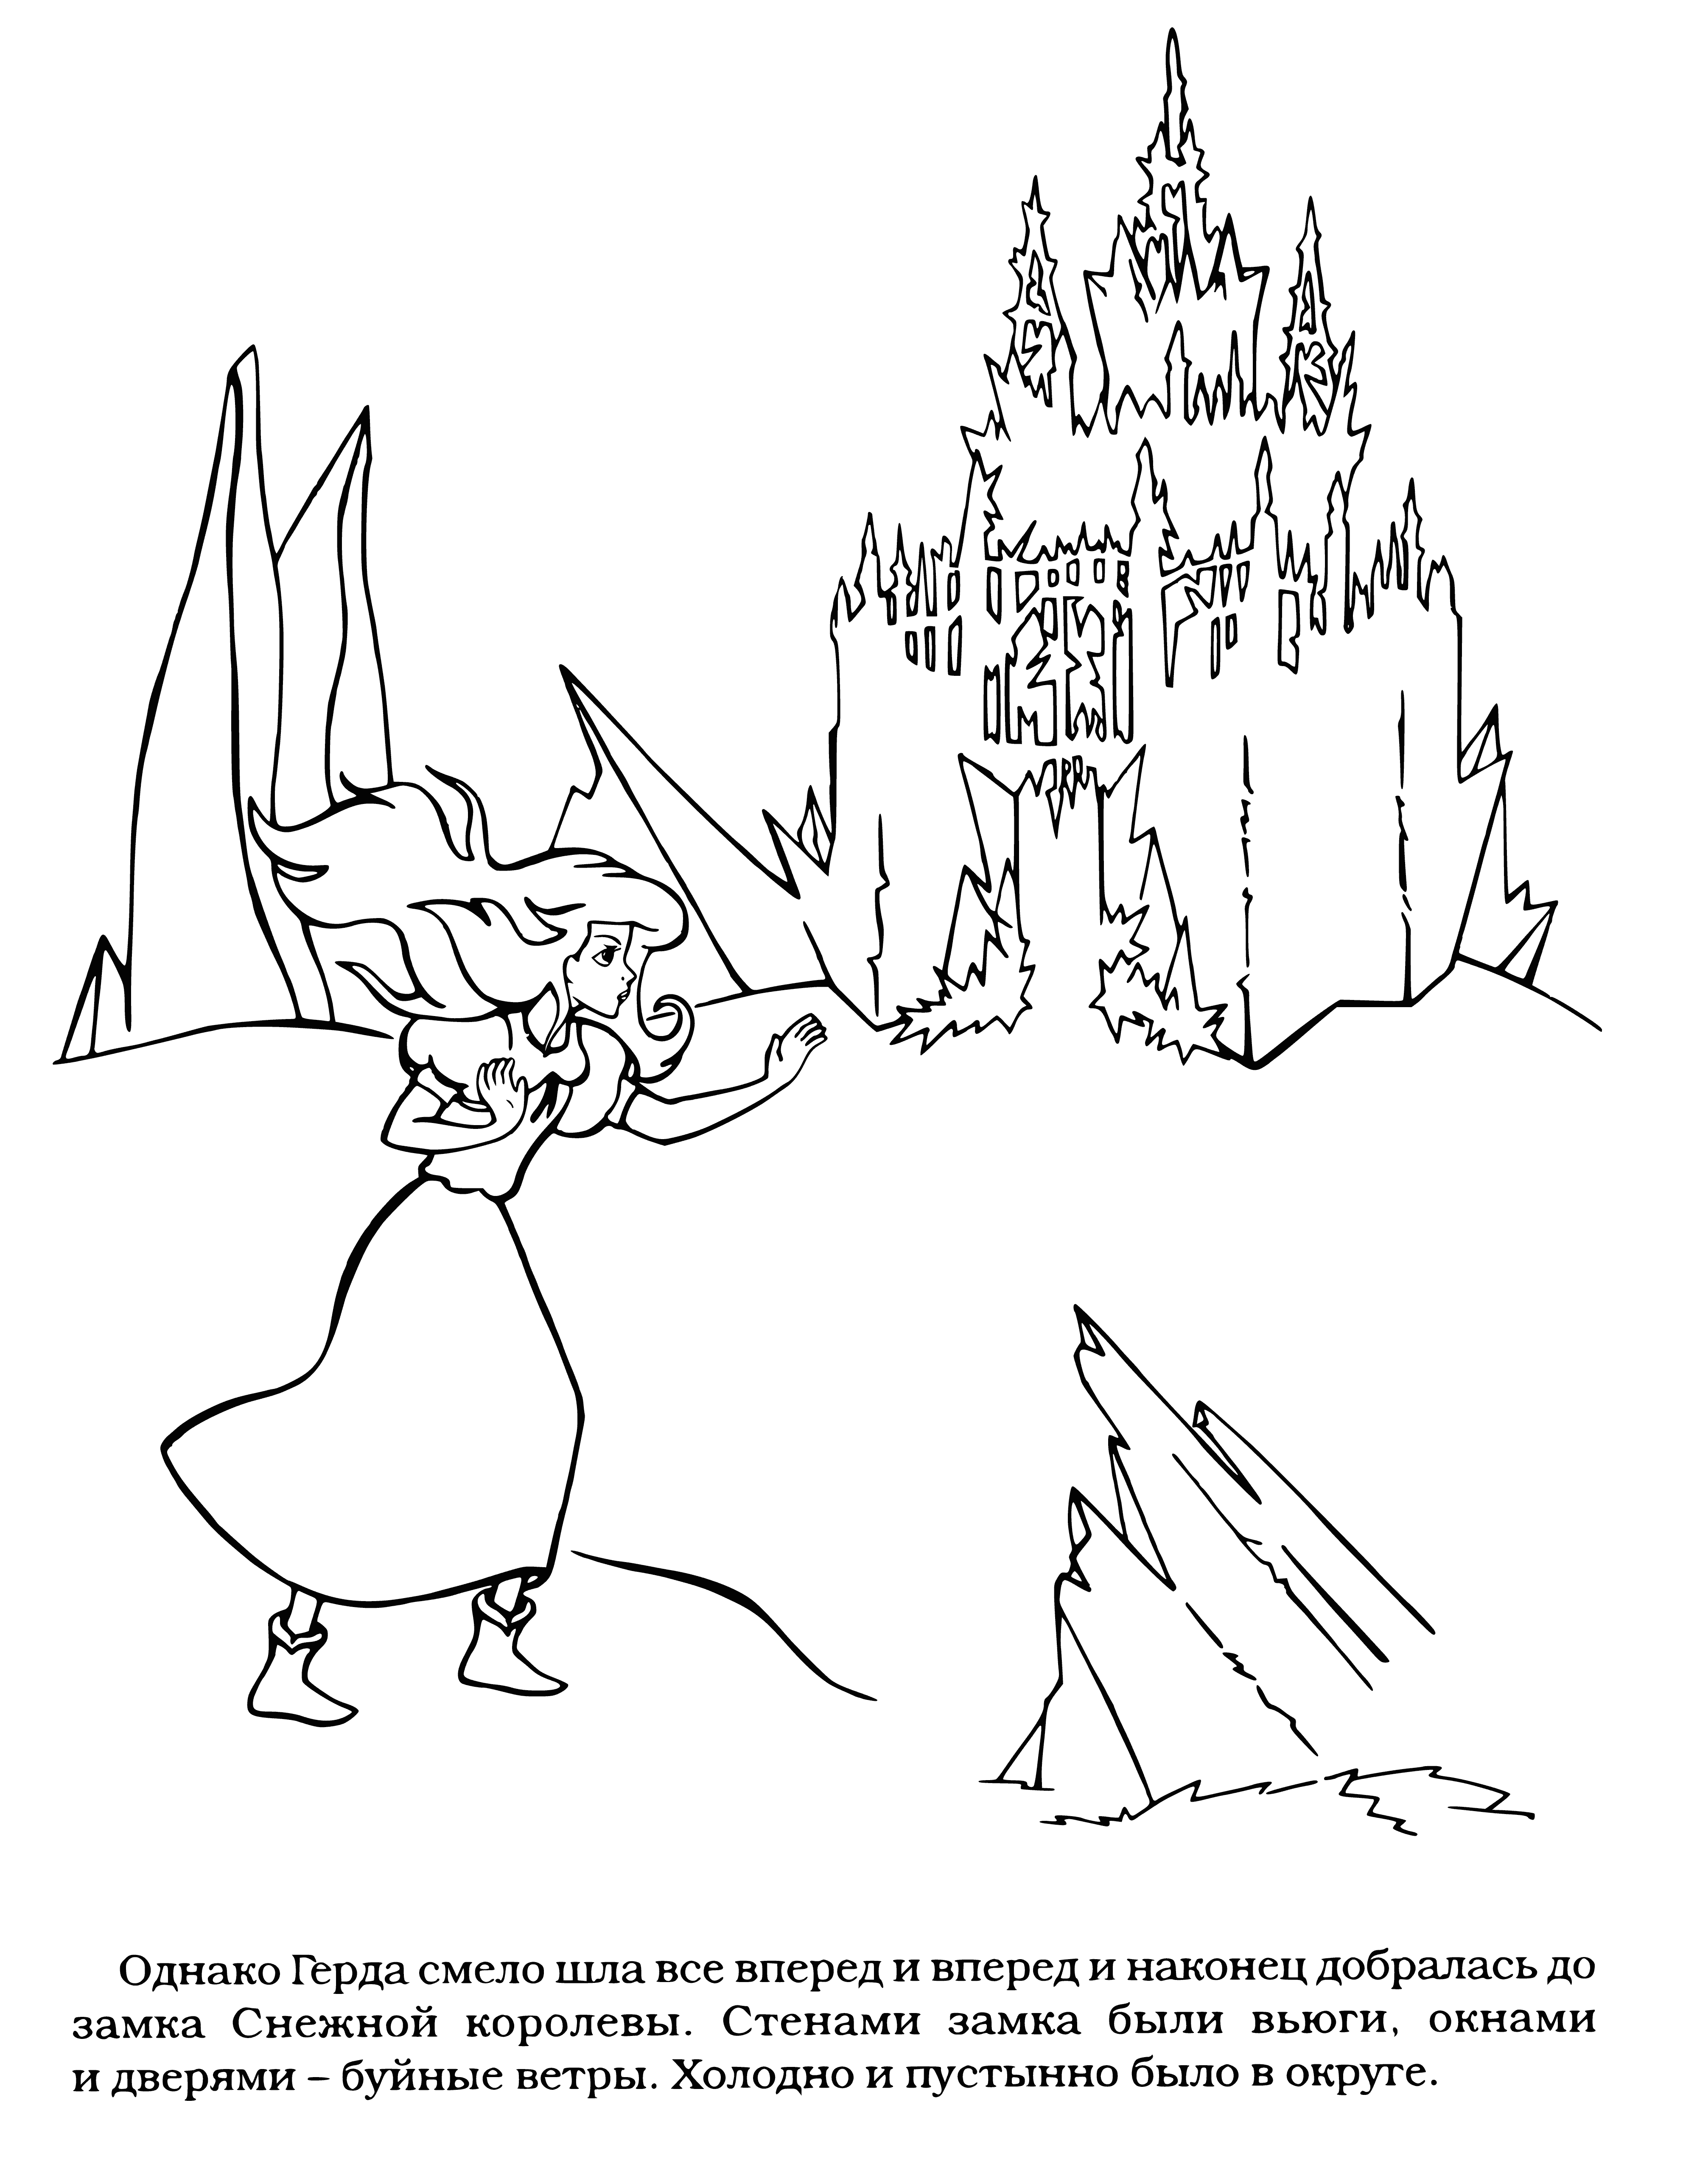 Snow Queen's Castle coloring page